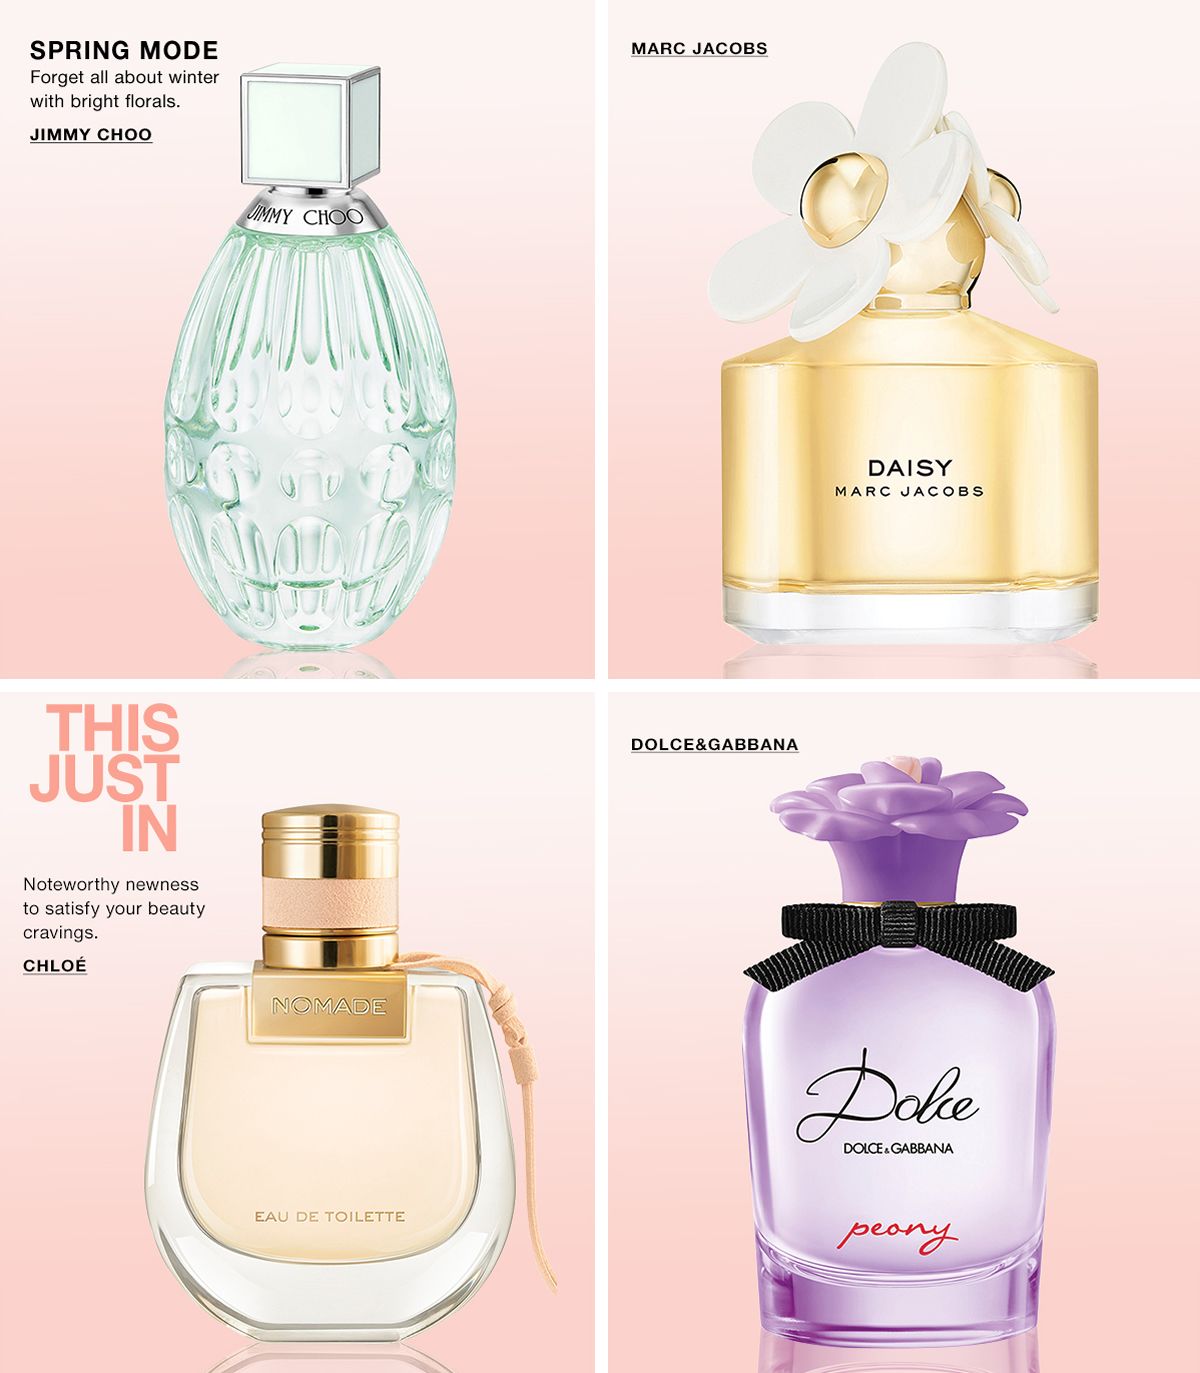 Beauty - All Perfume - Macy's